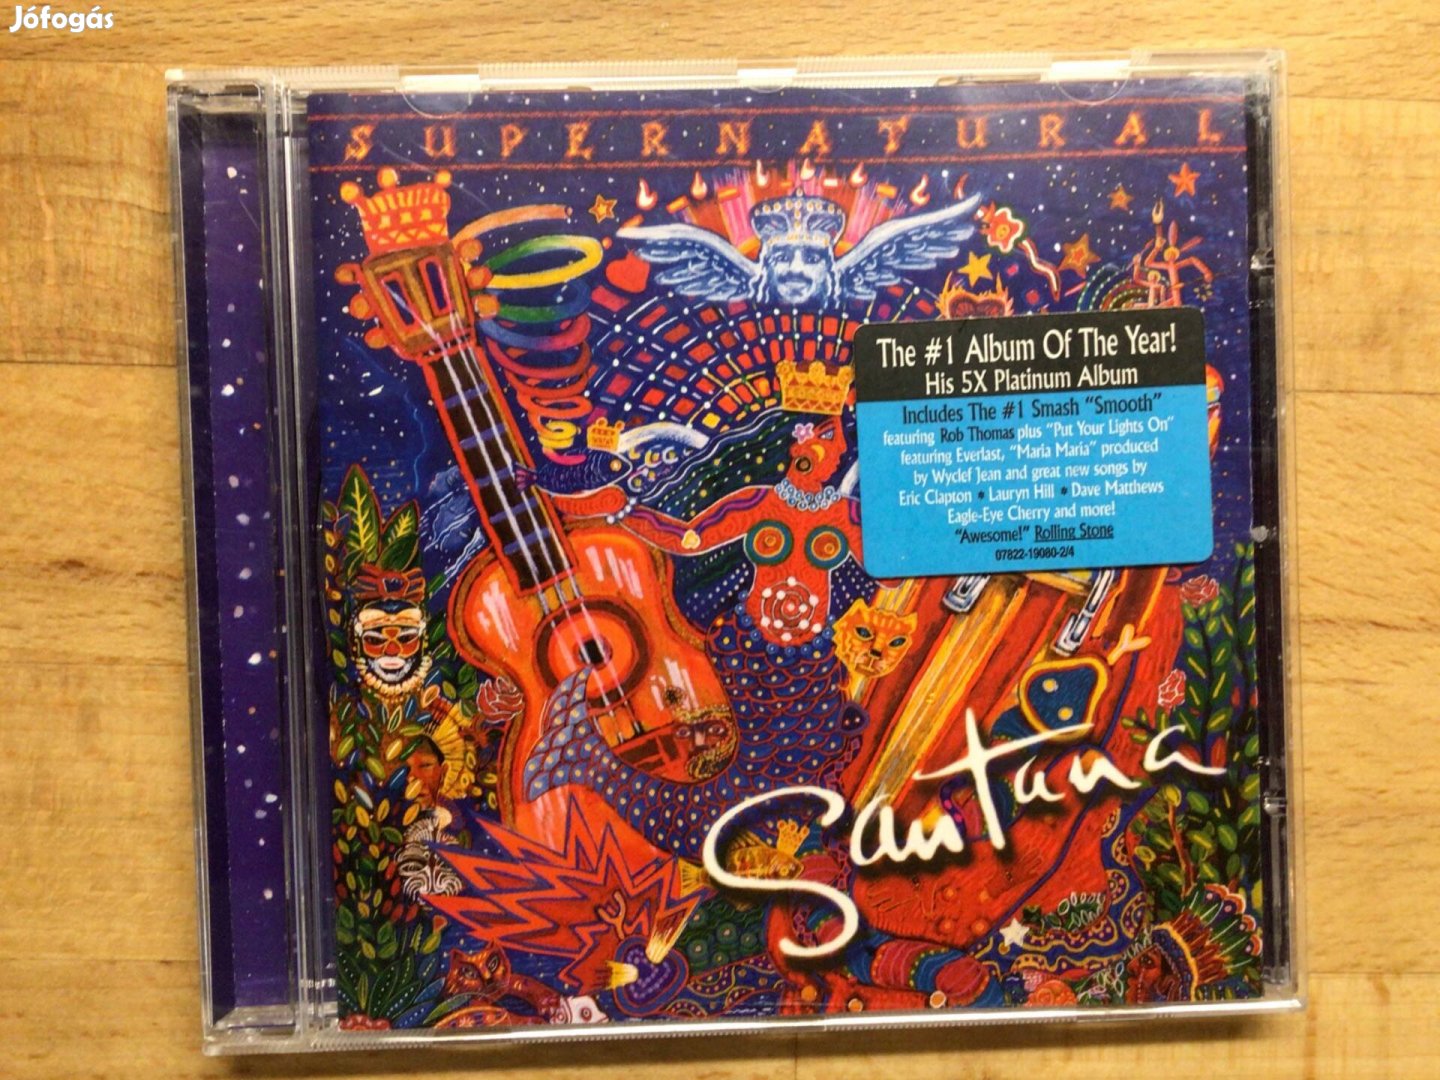 Santana - Supernatural, cd lemez